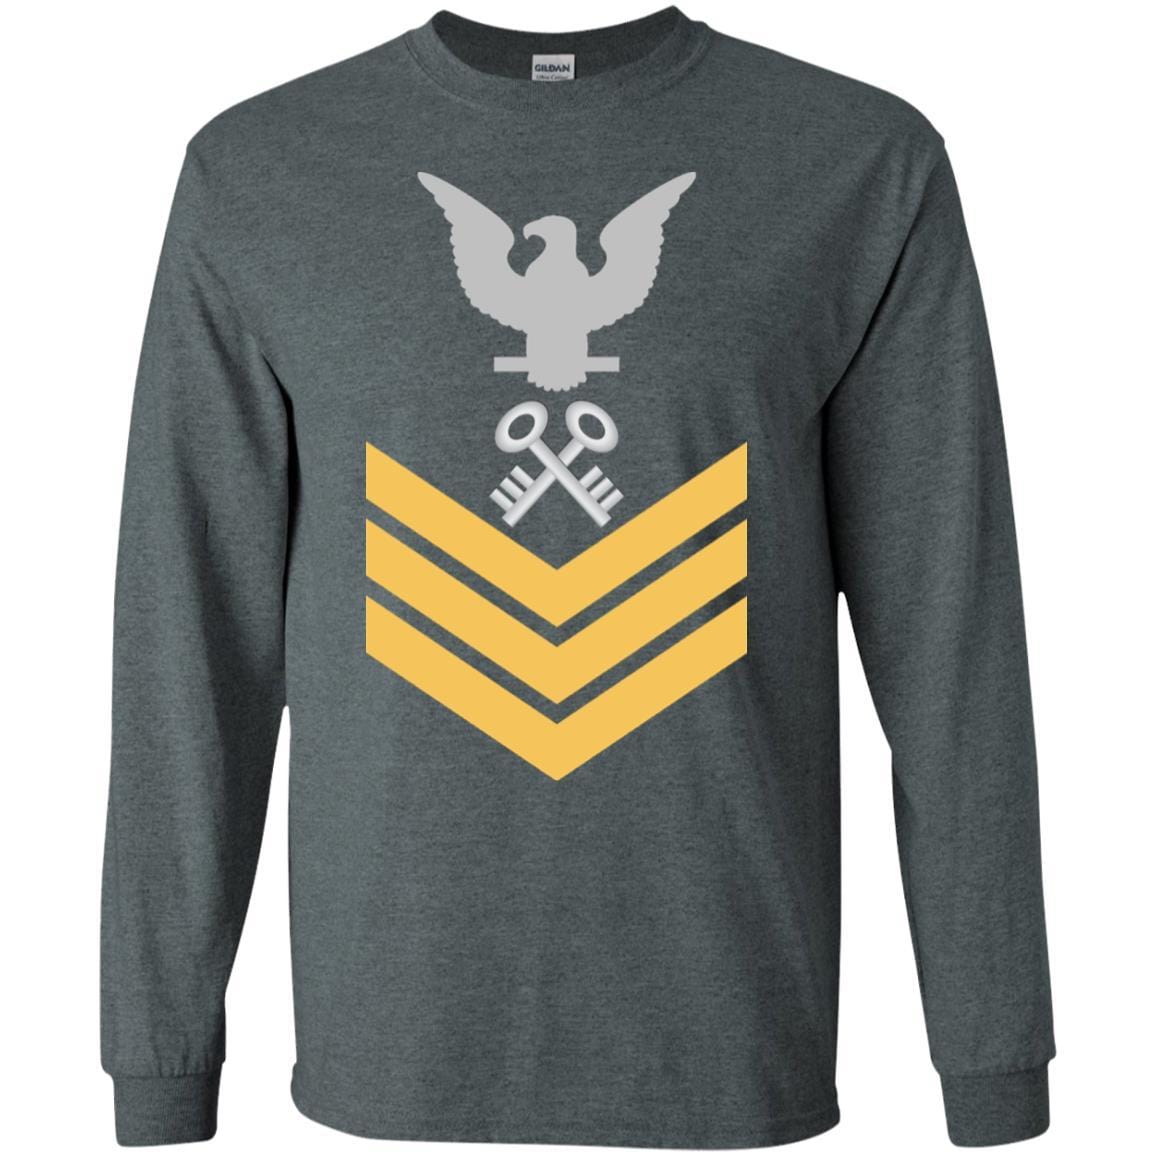 Military T-Shirt "Navy Storekeeper Navy SK E-6 Rating Badges On" Front For Men-TShirt-General-Veterans Nation